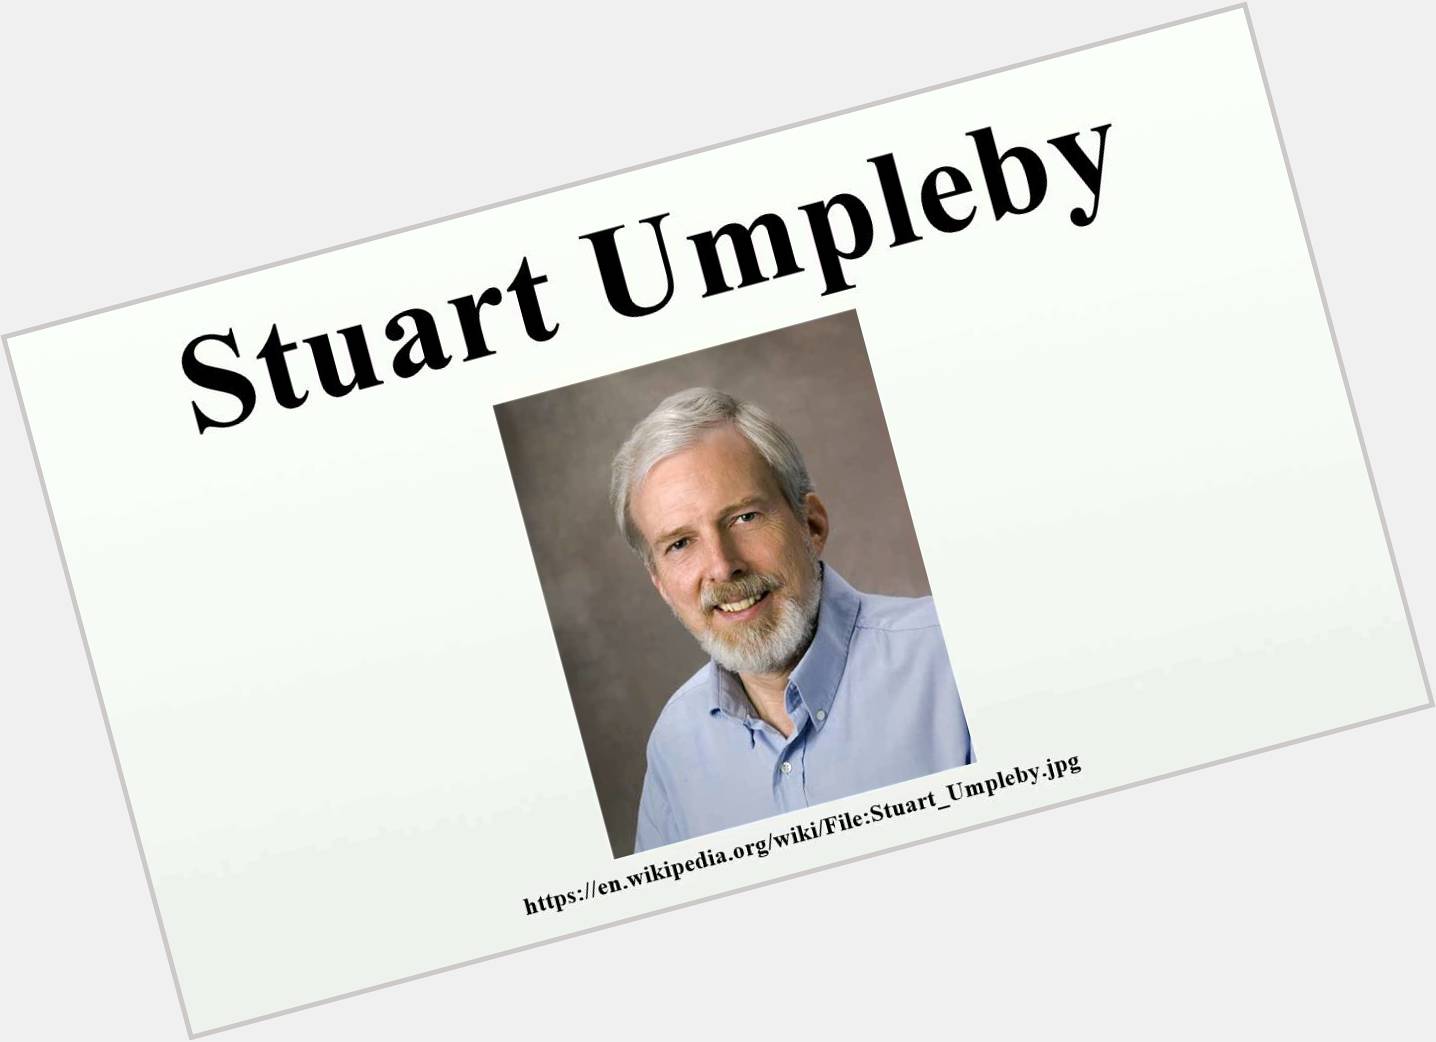 Stuart Umpleby dating 1